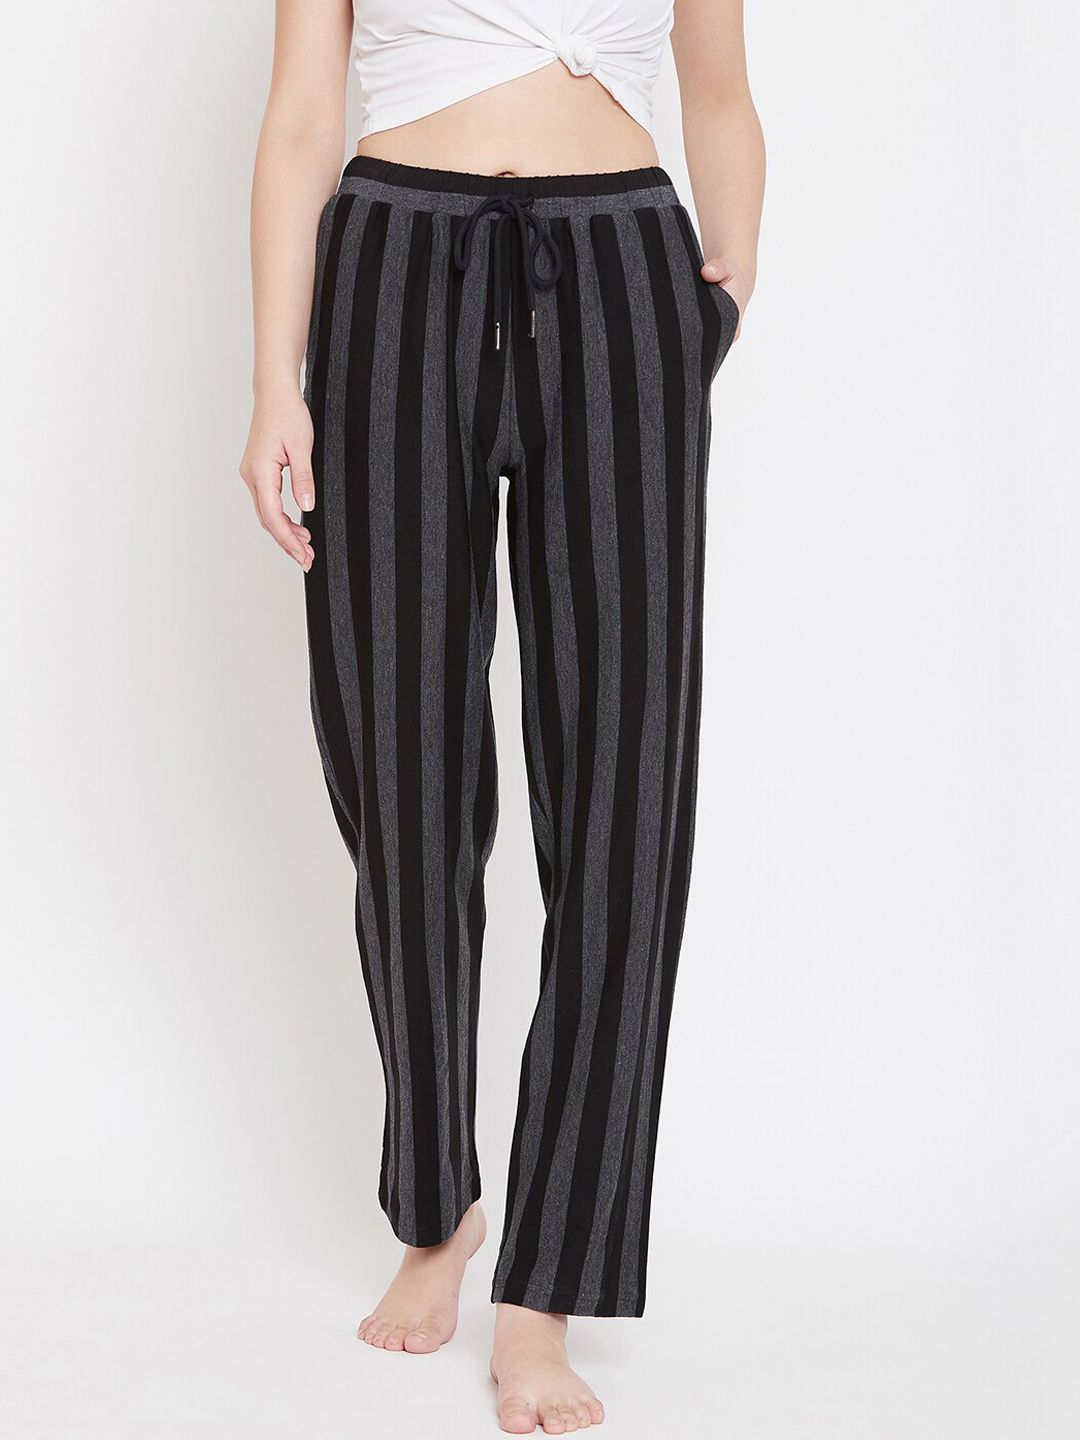 Hypernation Women Black & Grey Striped Lounge Pants Price in India